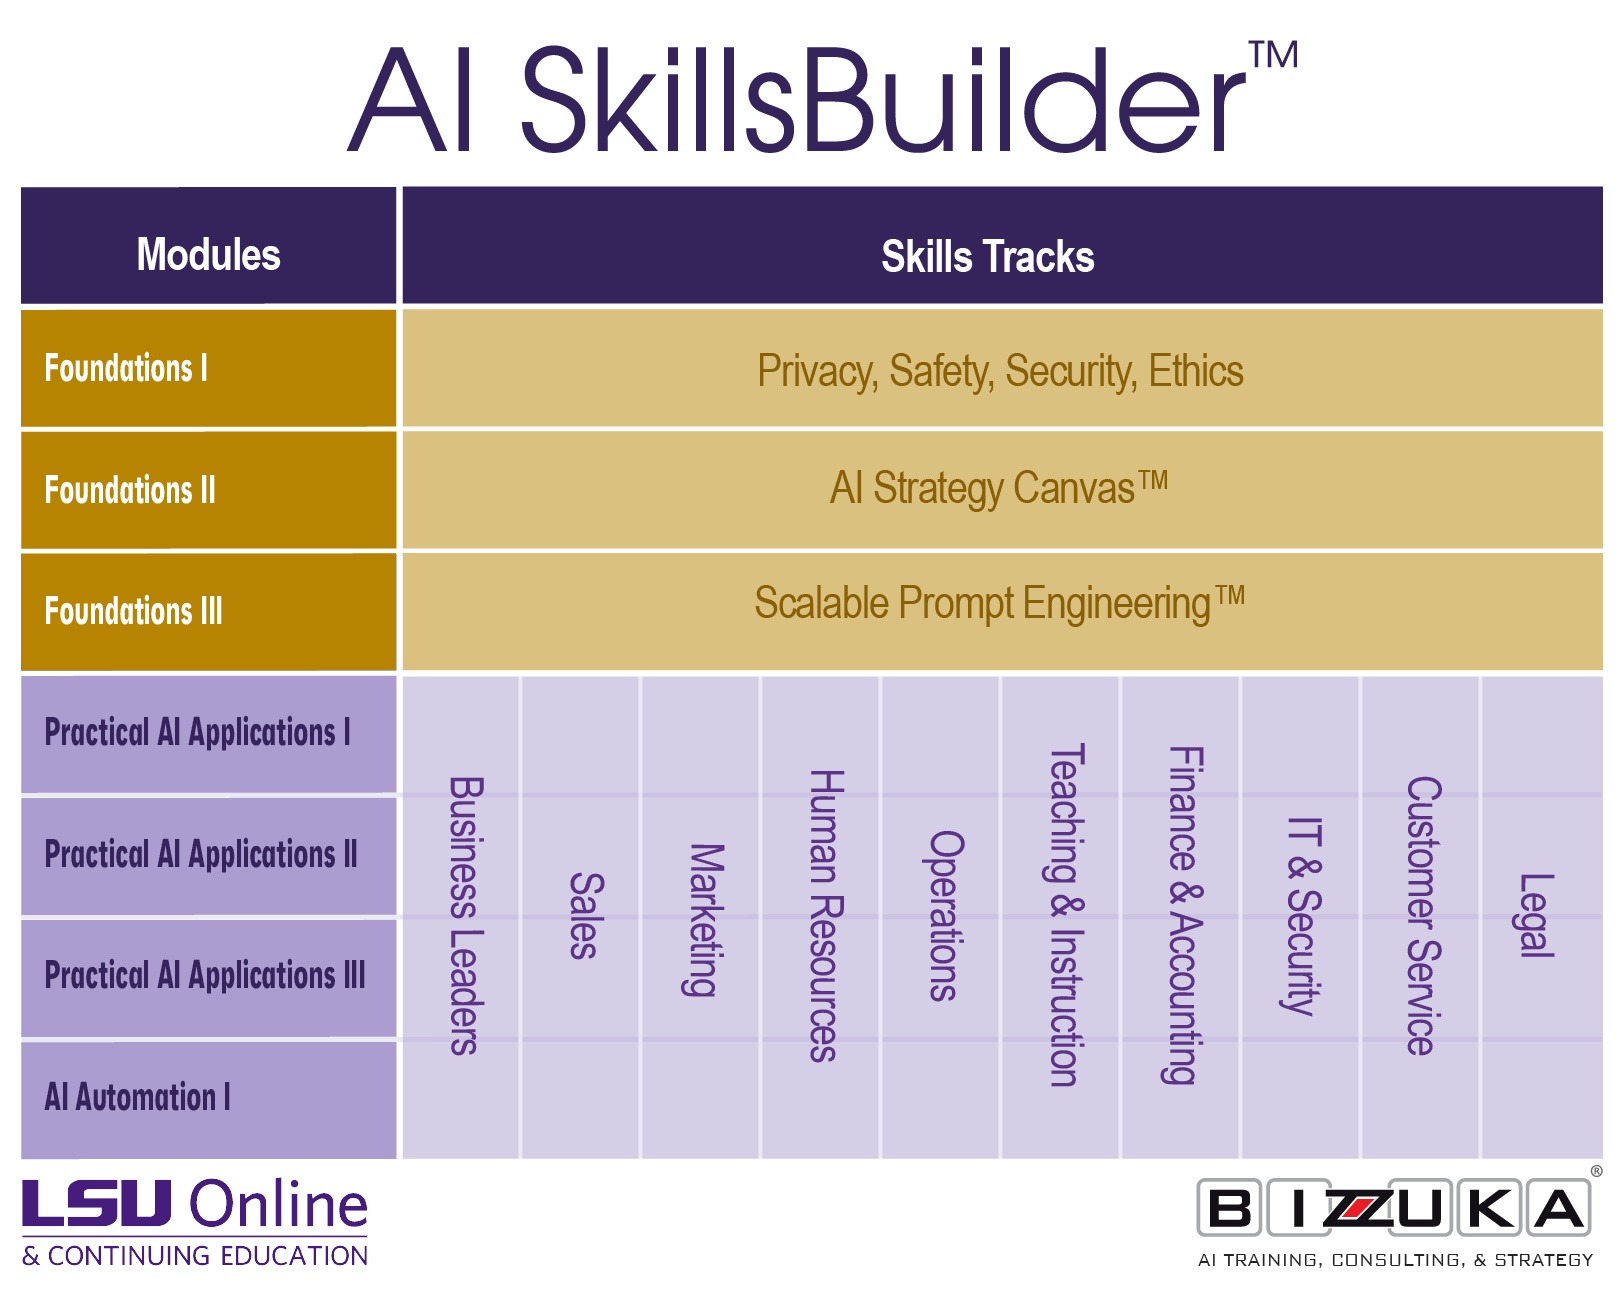 AI SkillsBuilder tracks